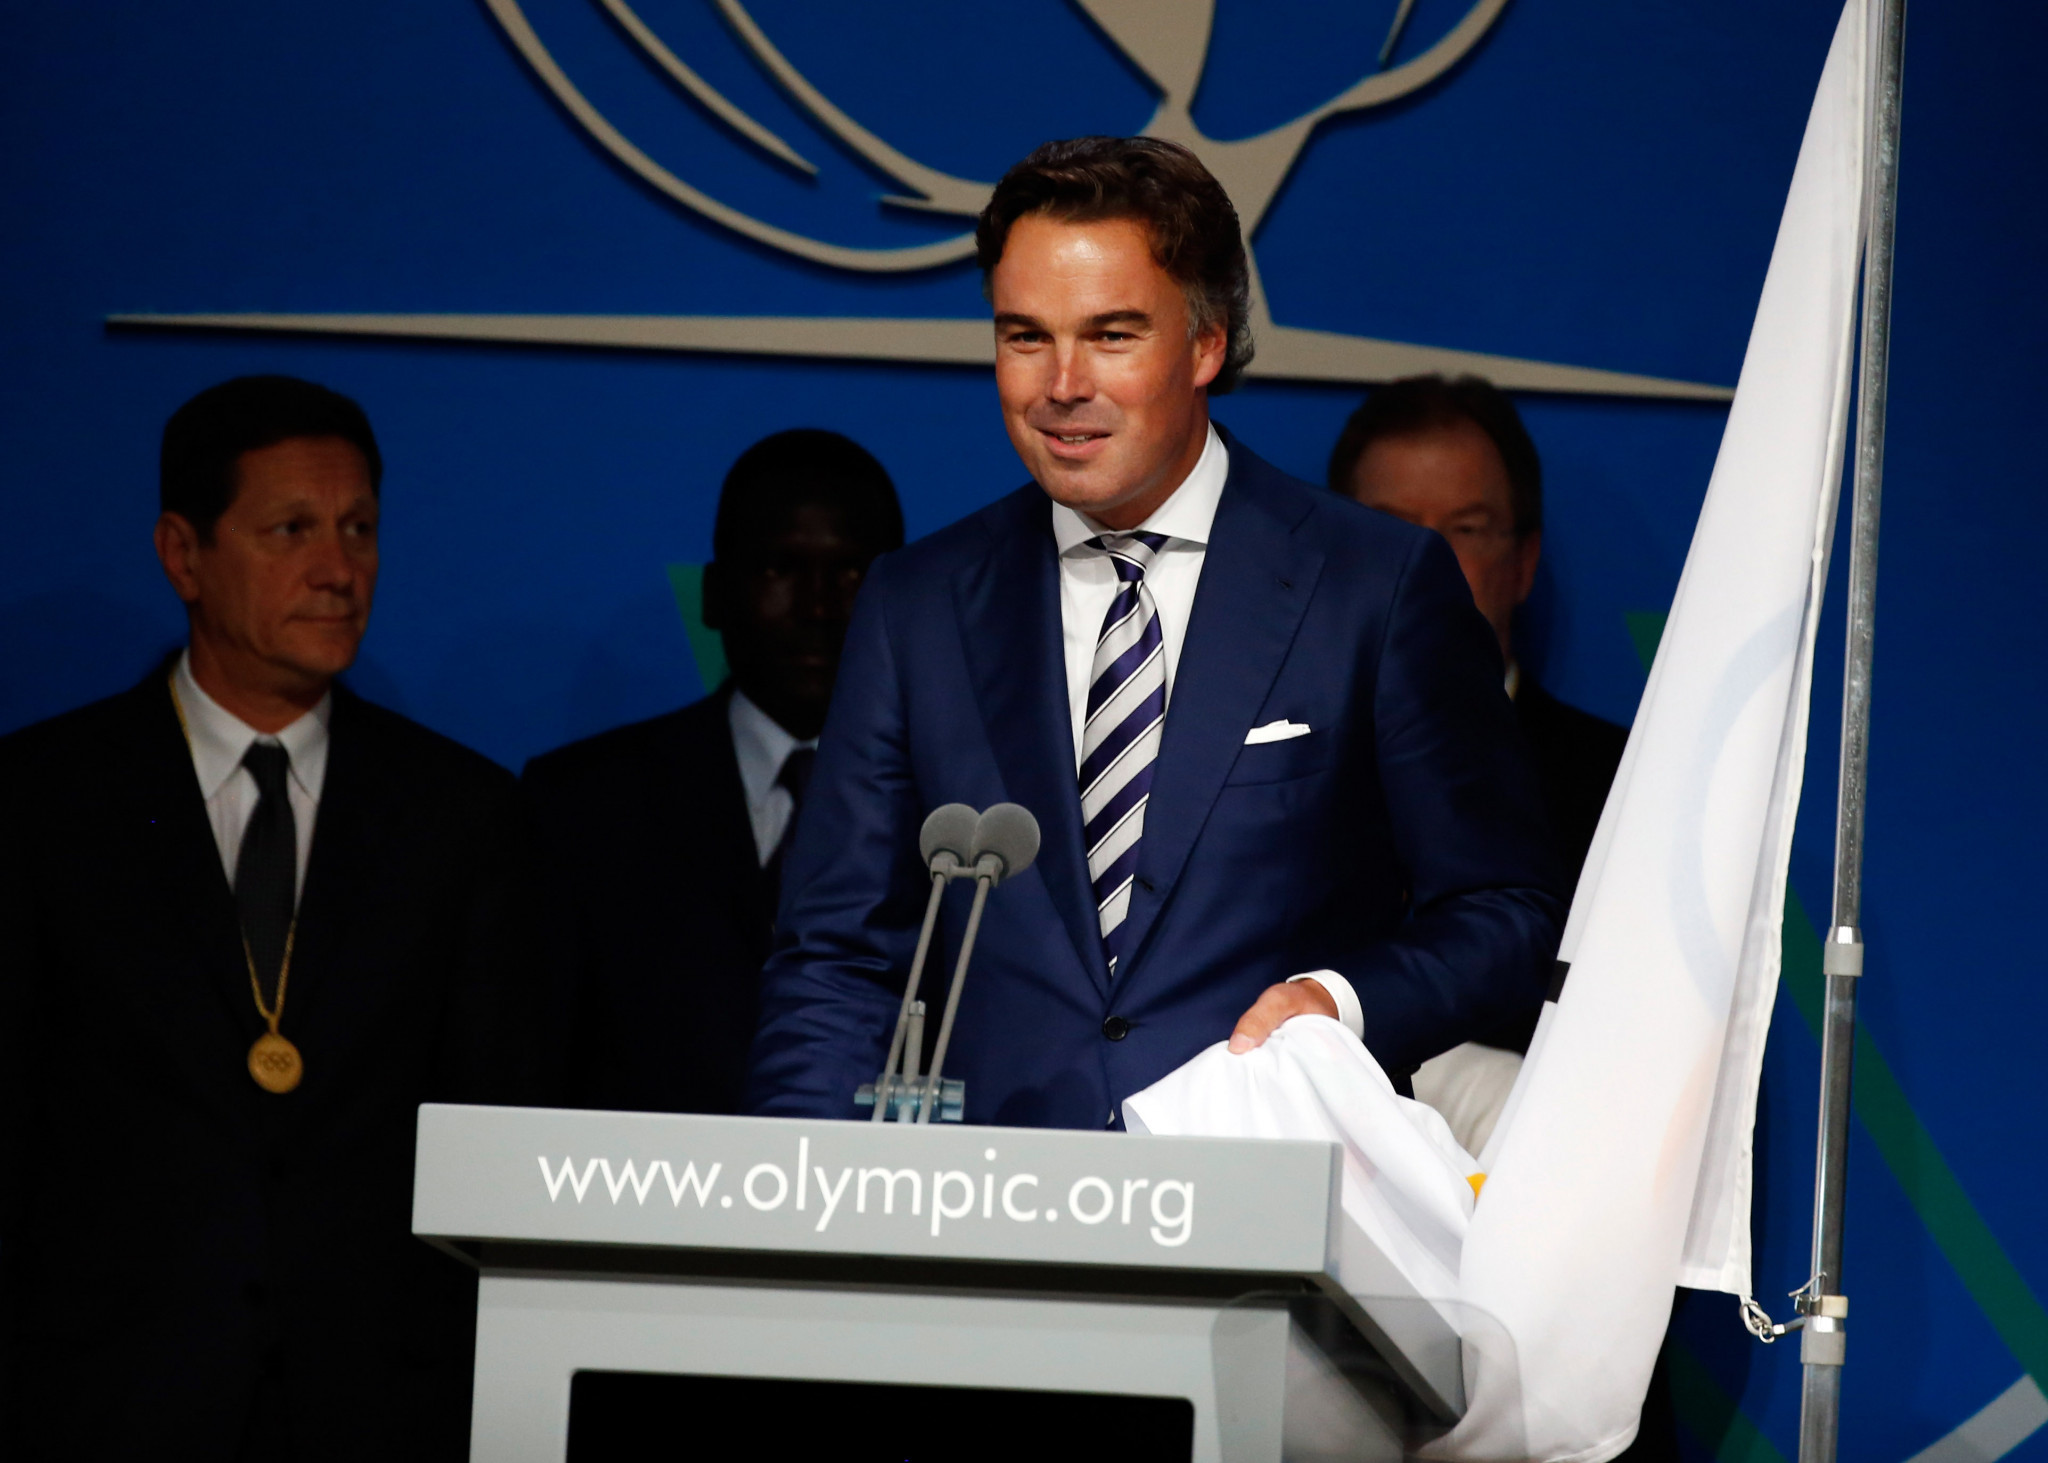 Eurlings resigns as IOC member following backlash over assault claims